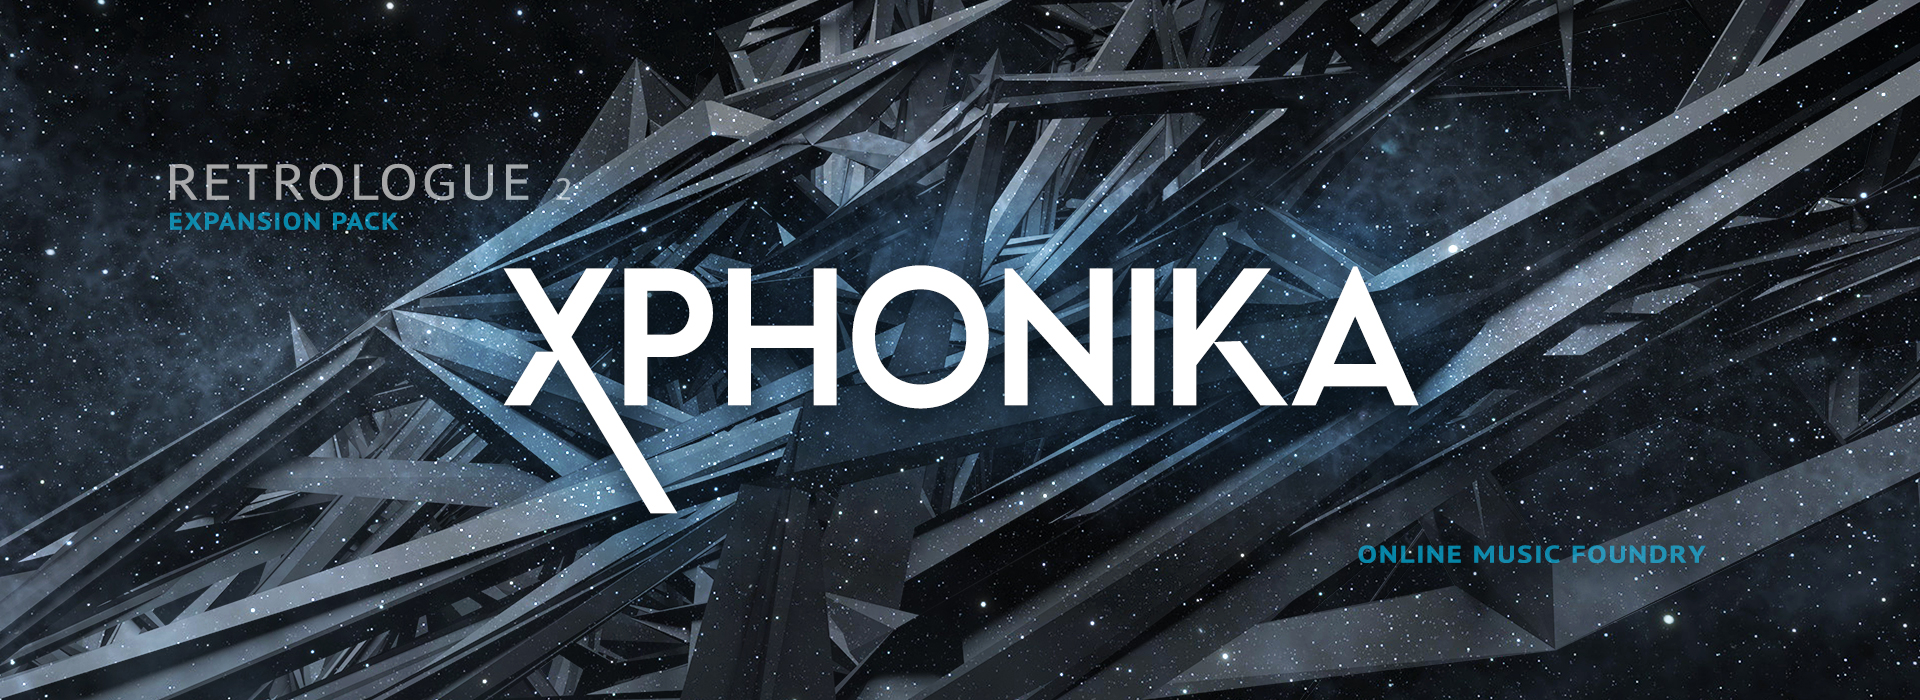 Xphonika for Retrologue 2